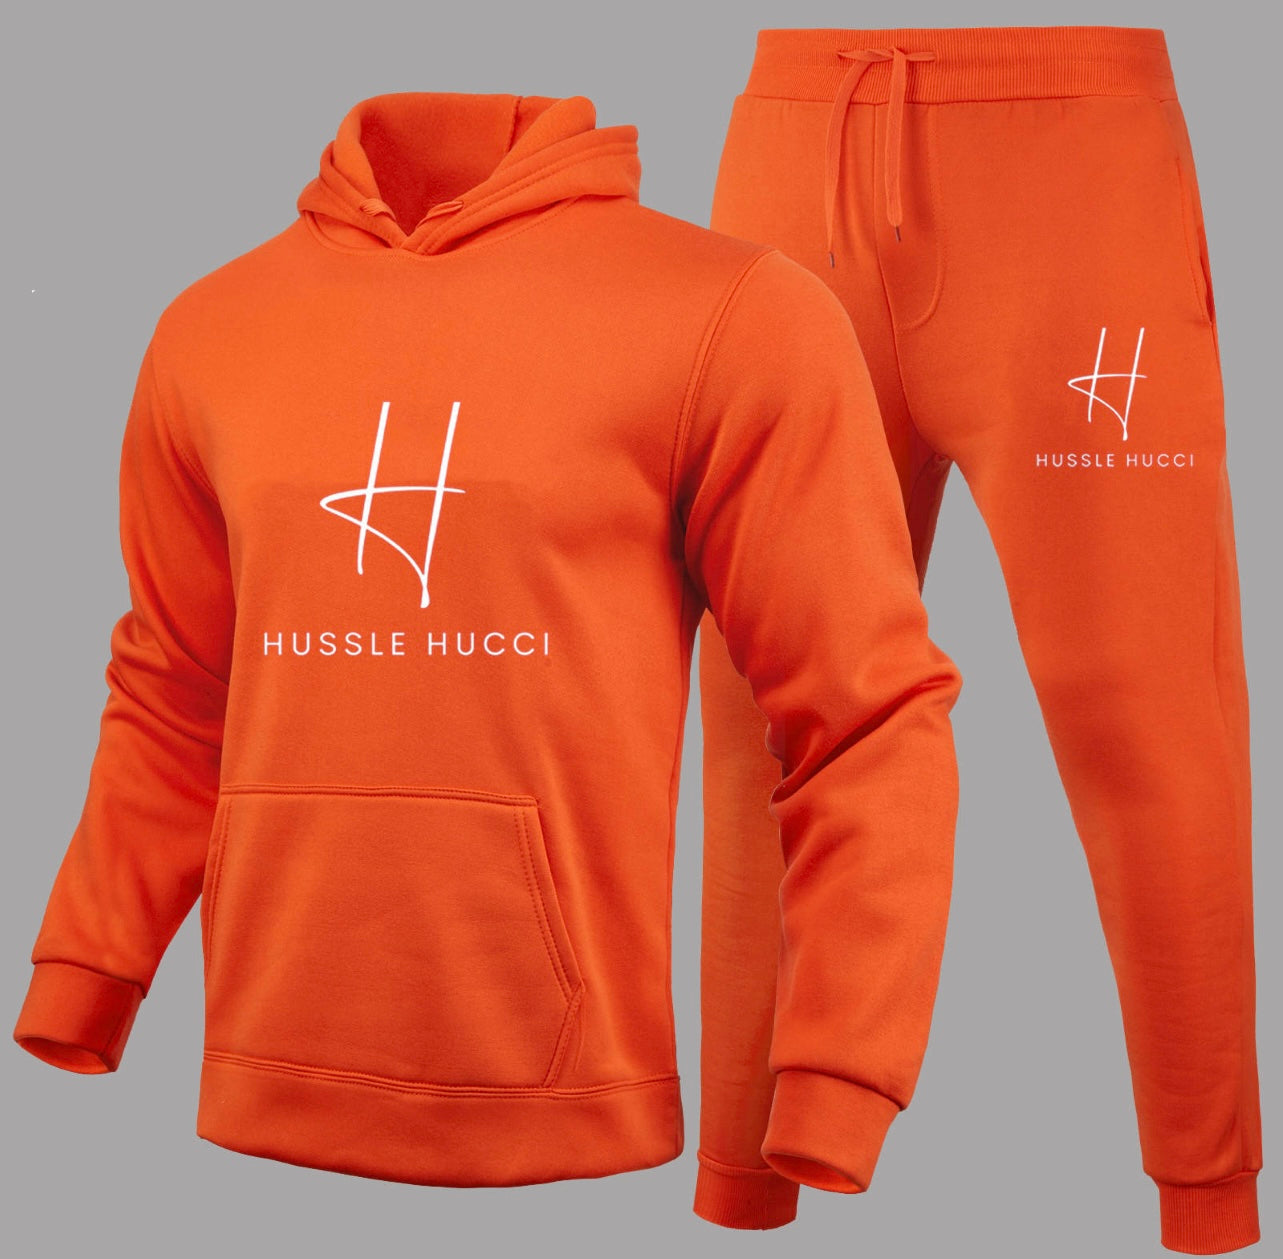 Hussle Hucci unisex Sweat suit